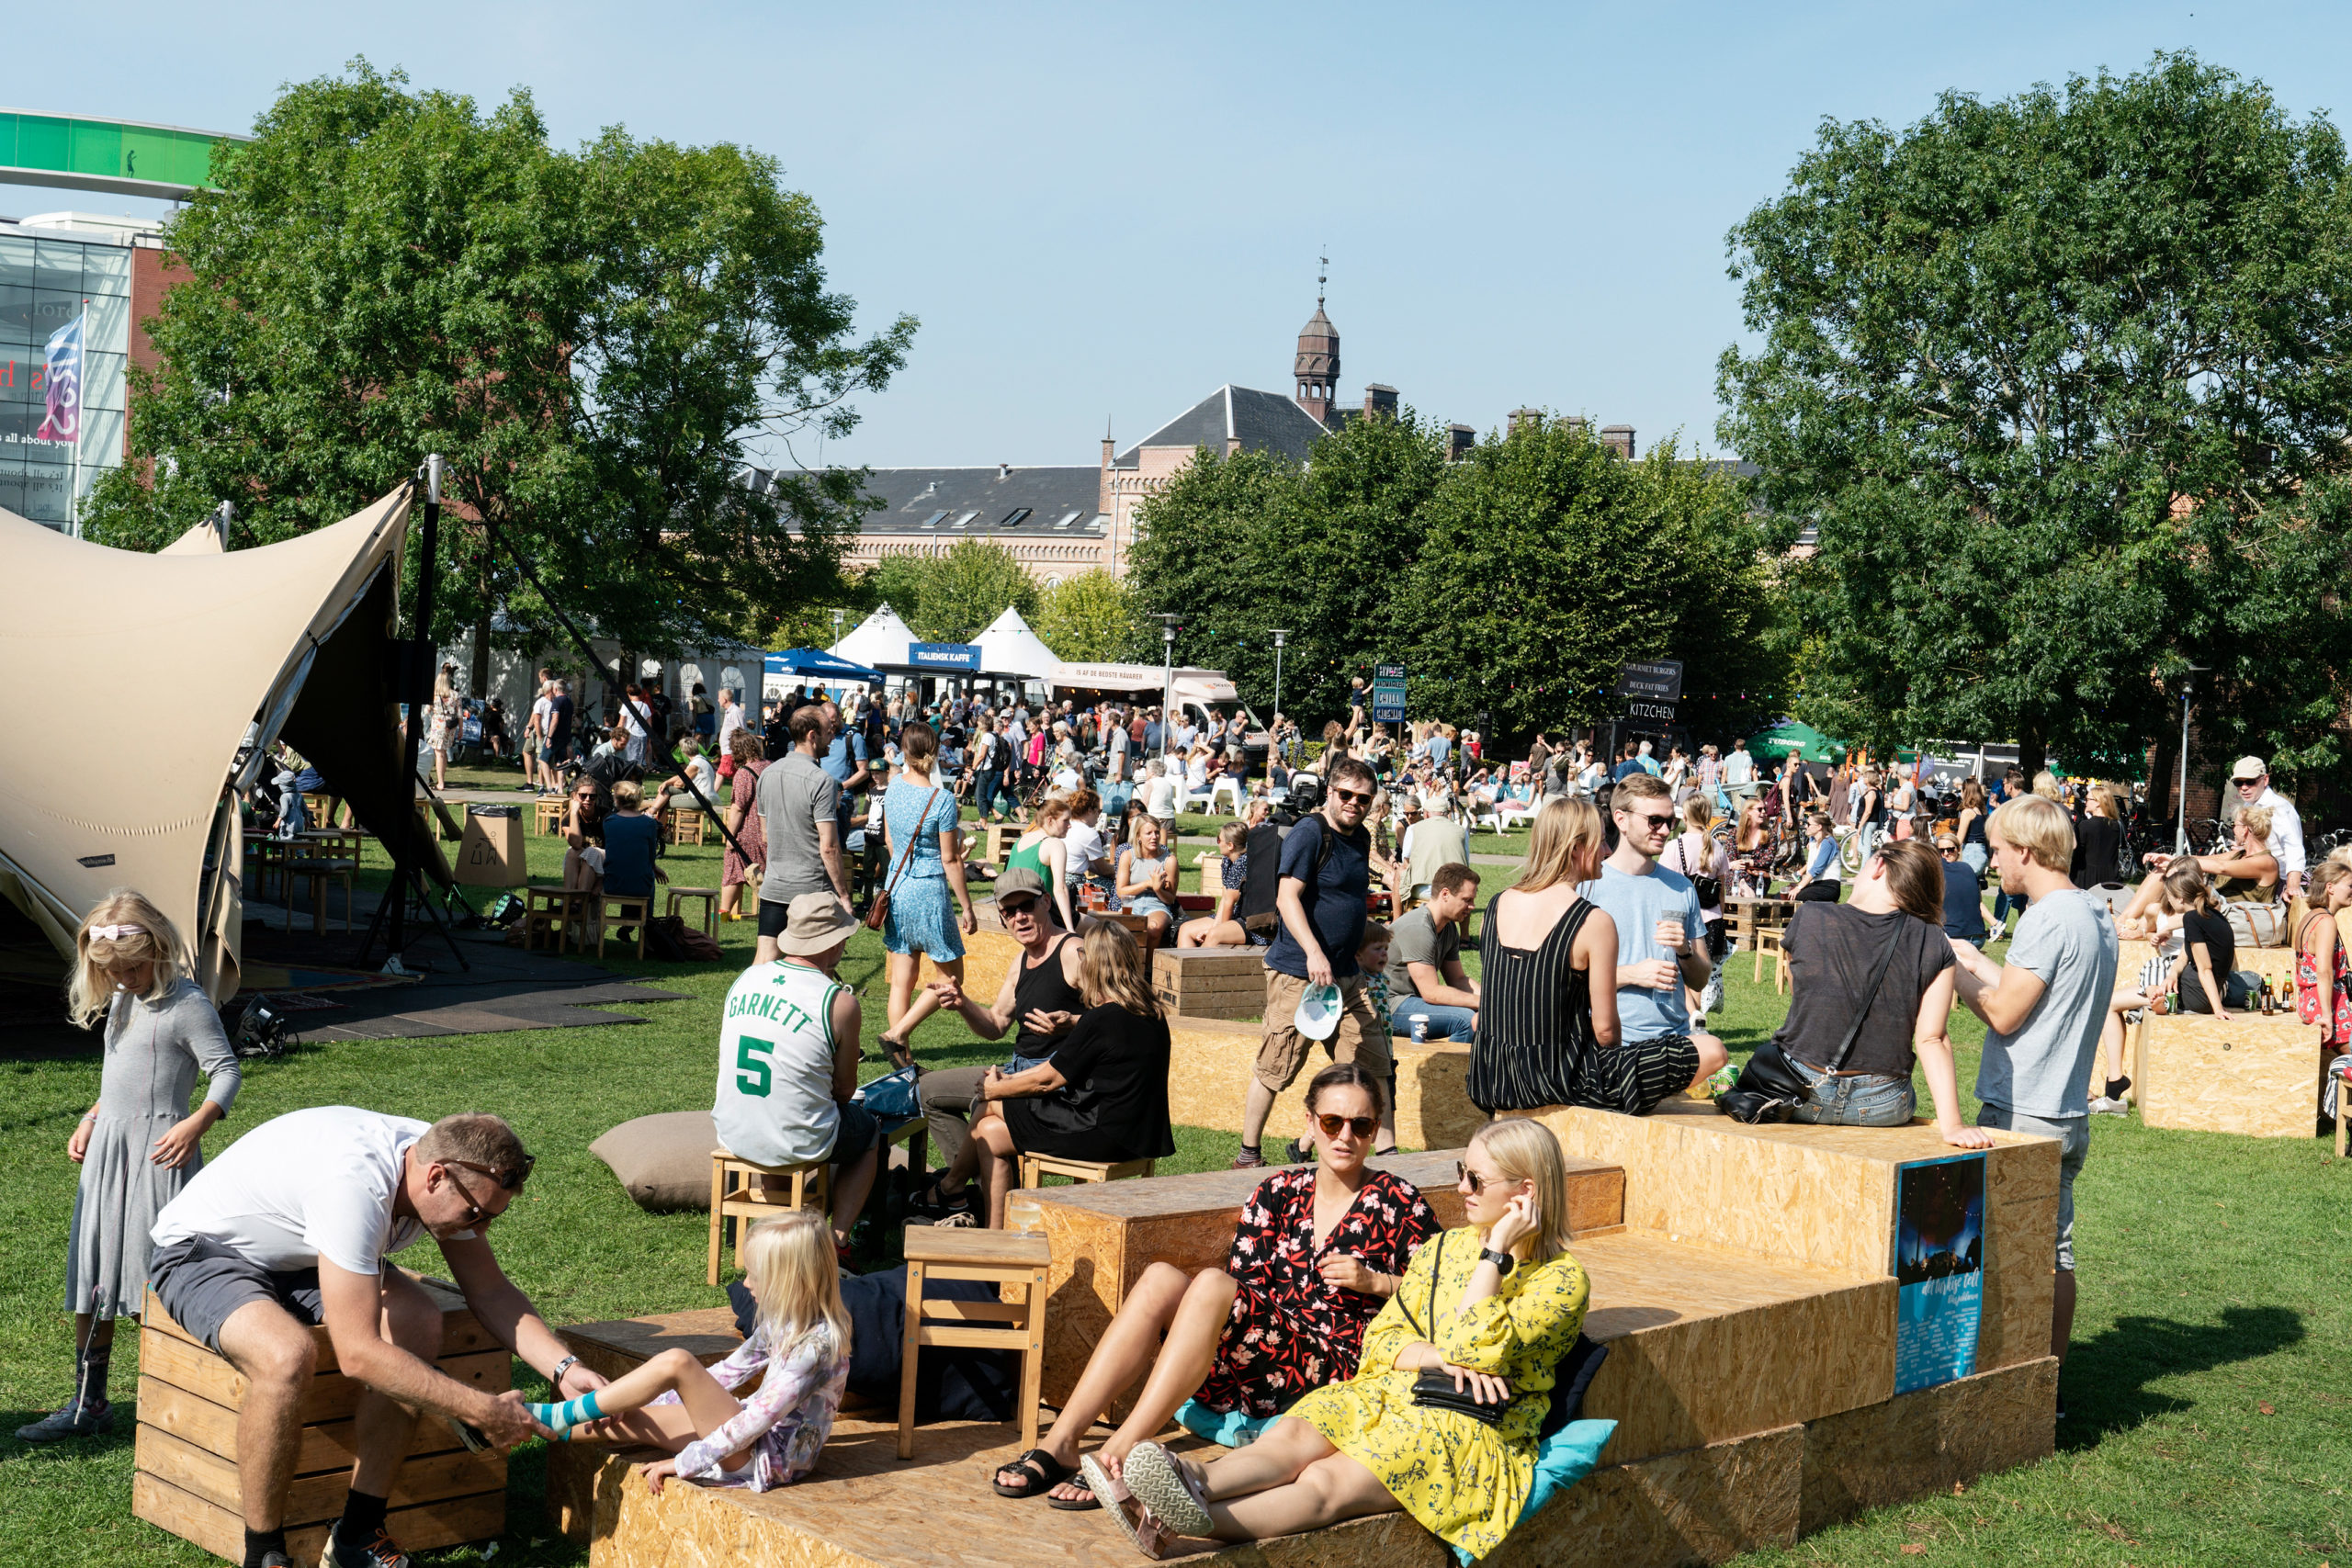 snave død Grøn baggrund The Best Festivals & Fairs in Copenhagen and Denmark